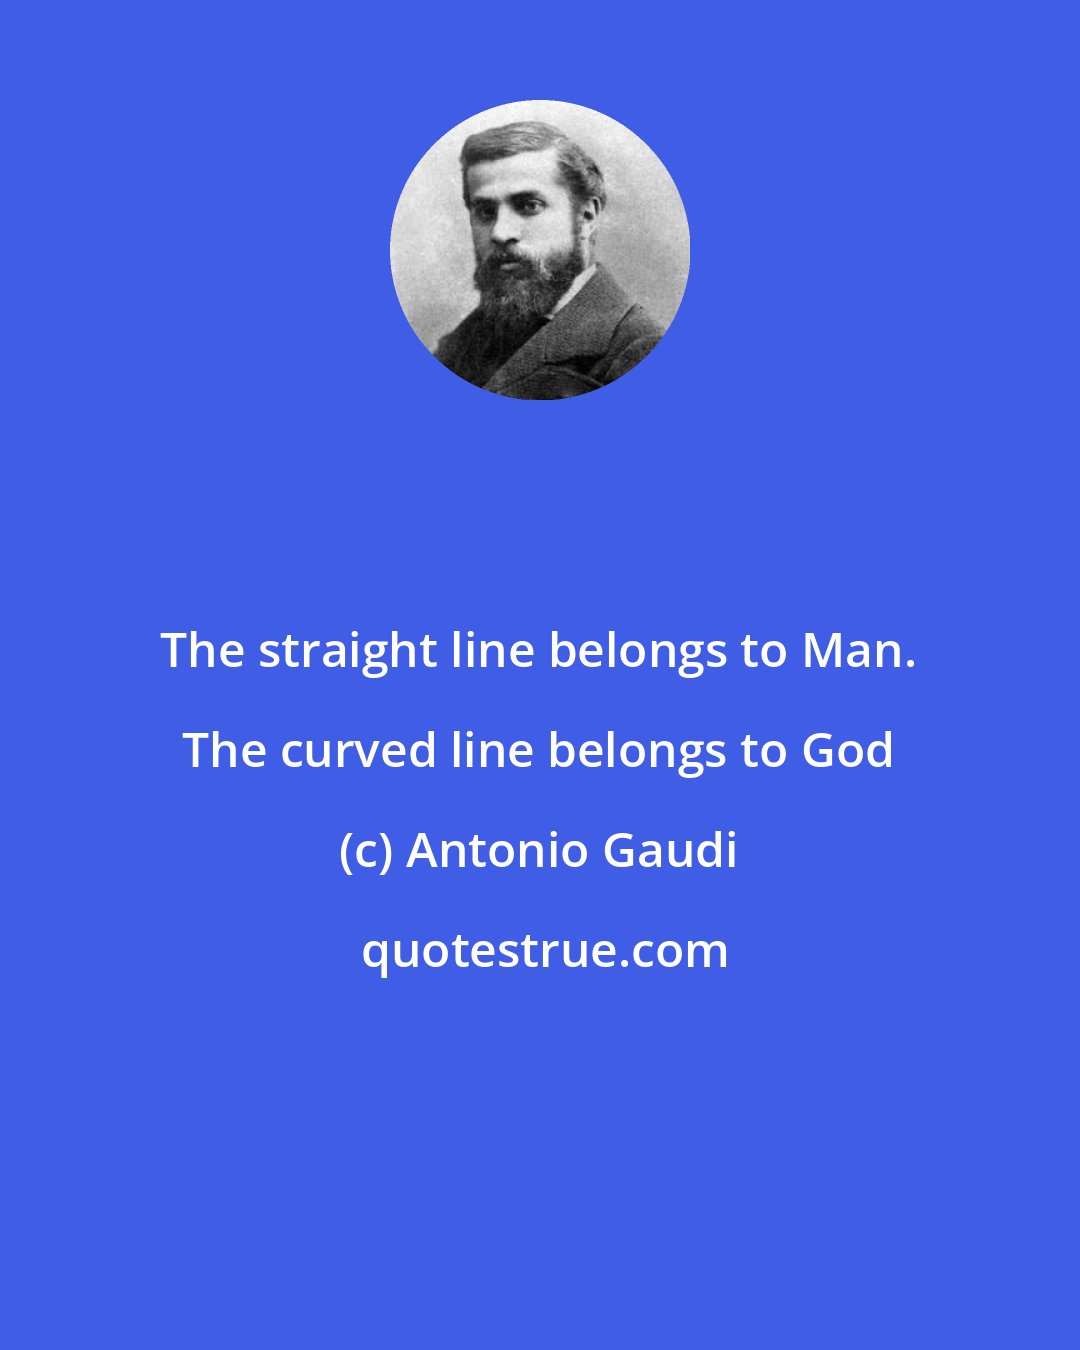 Antonio Gaudi: The straight line belongs to Man. The curved line belongs to God